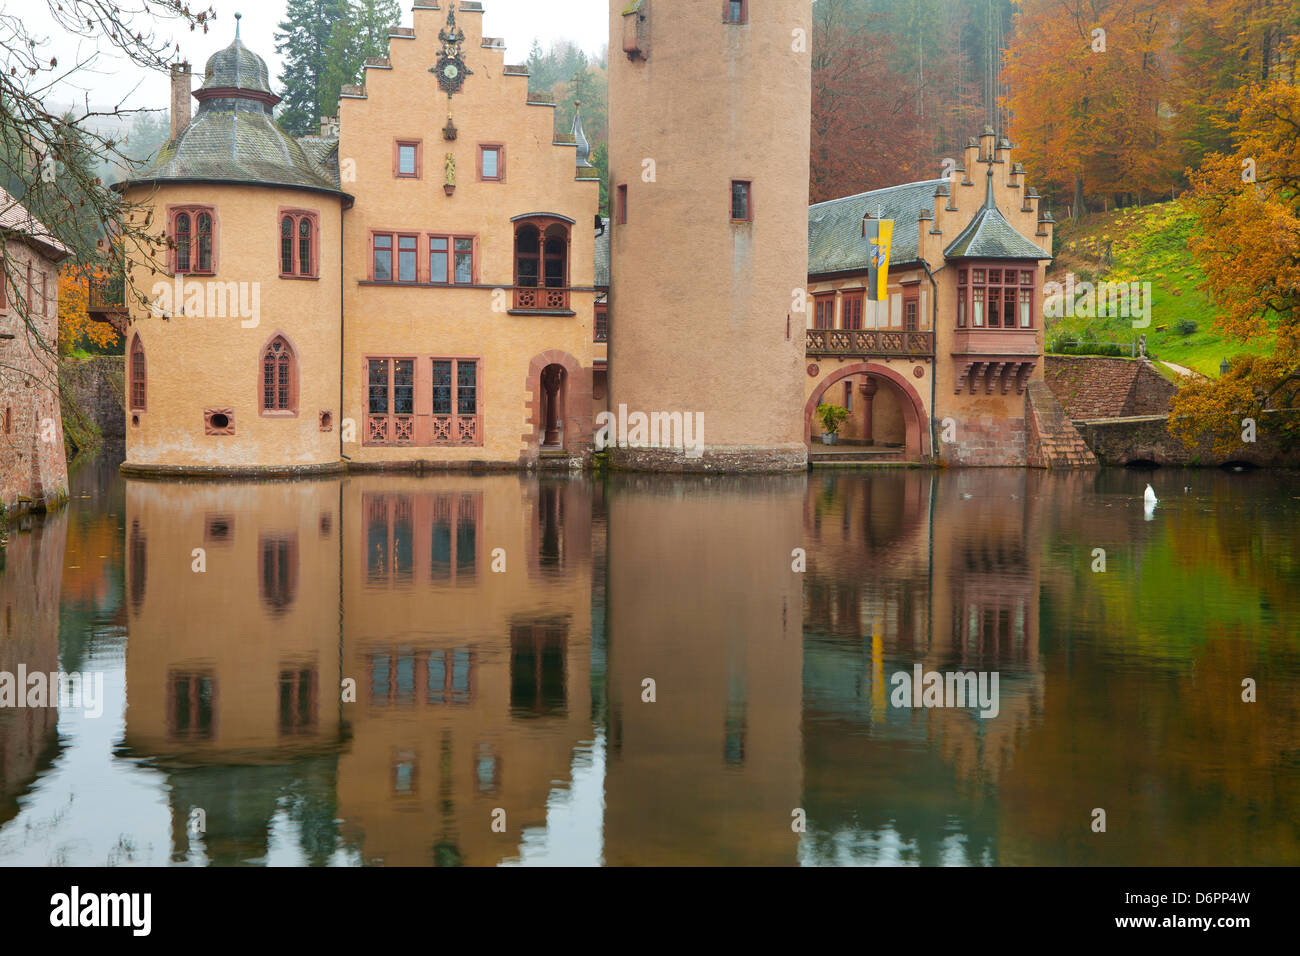 Schloss (Castle) Mespelbrunn in autumn, near Frankfurt, Germany, Europe Stock Photo